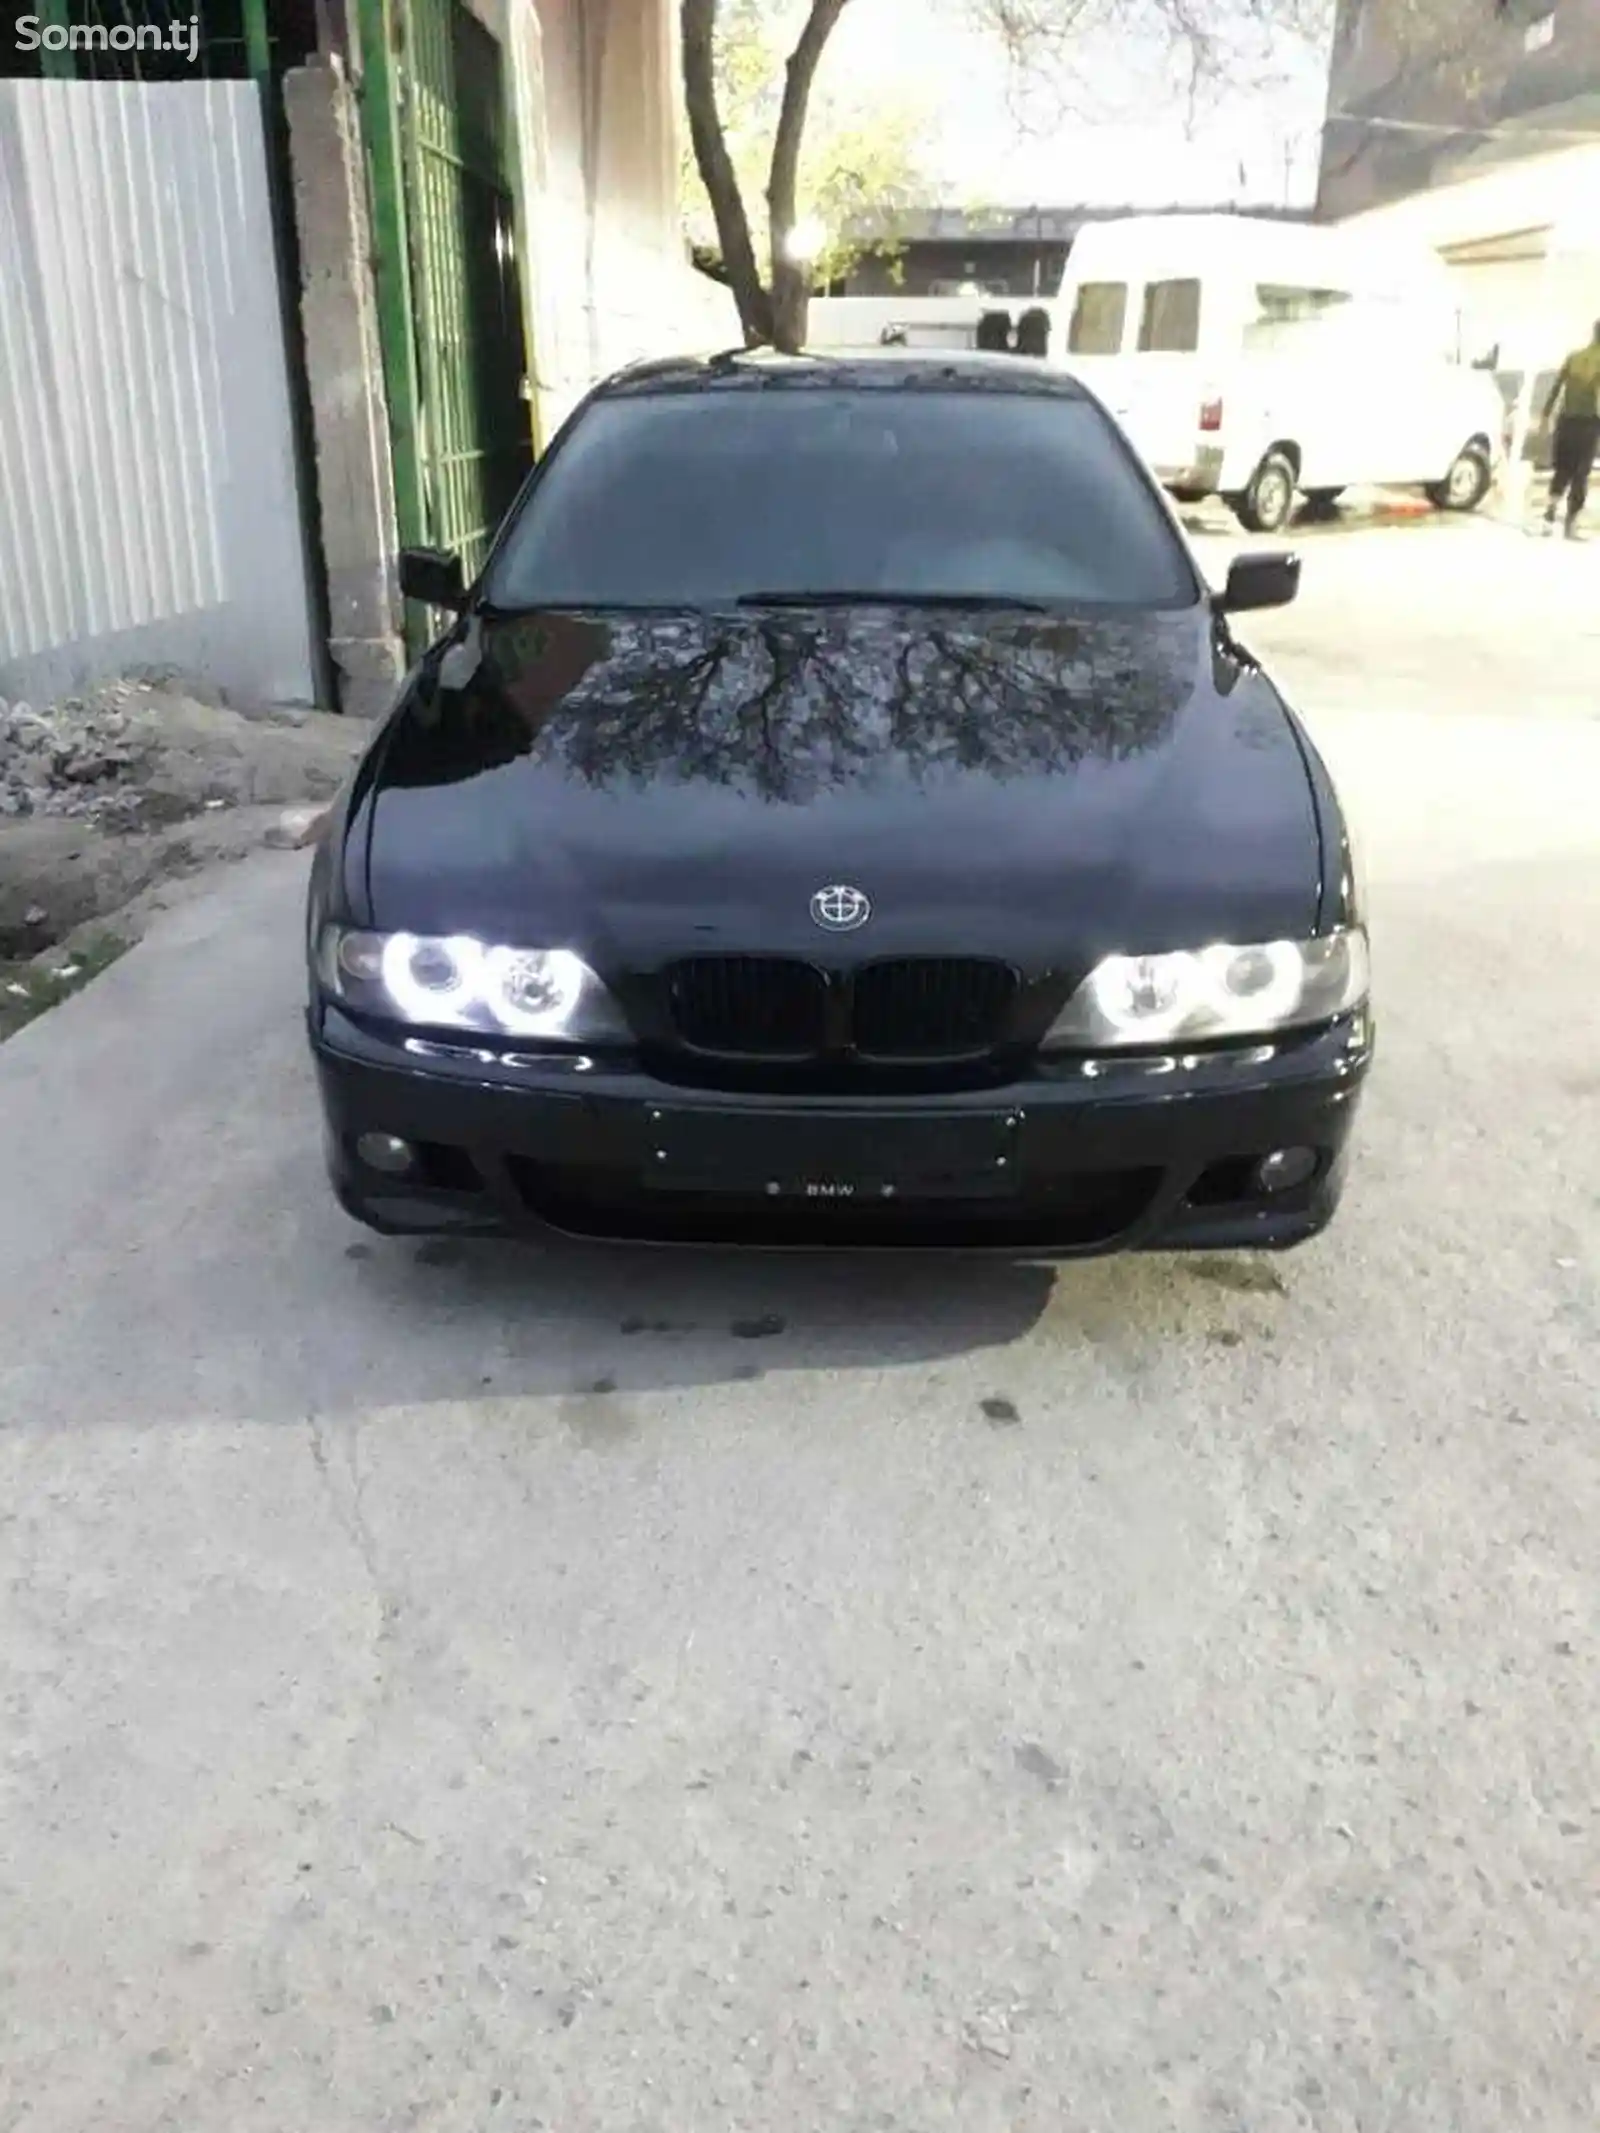 BMW 5 series, 1996-4